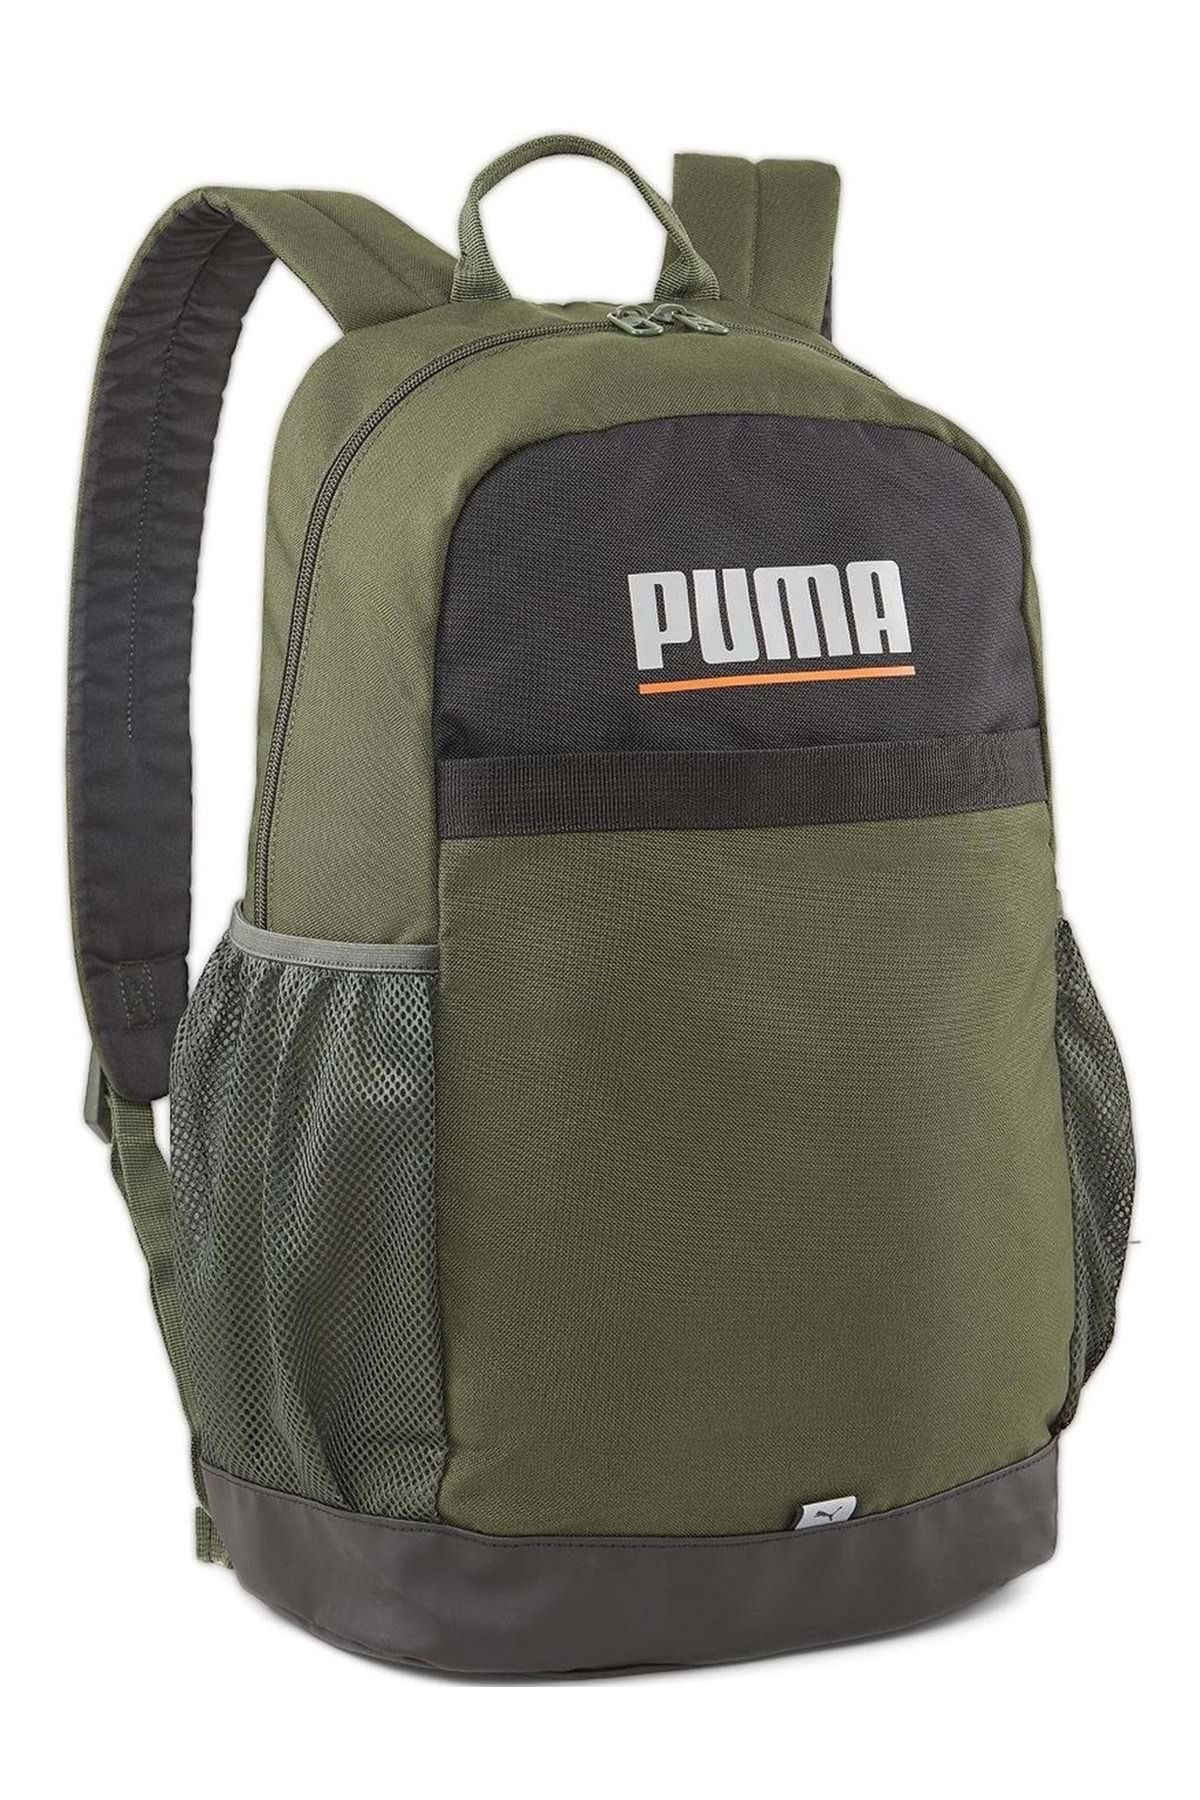 Puma Plus Backpack 079615-01 Unisex Sırt Çantası Haki